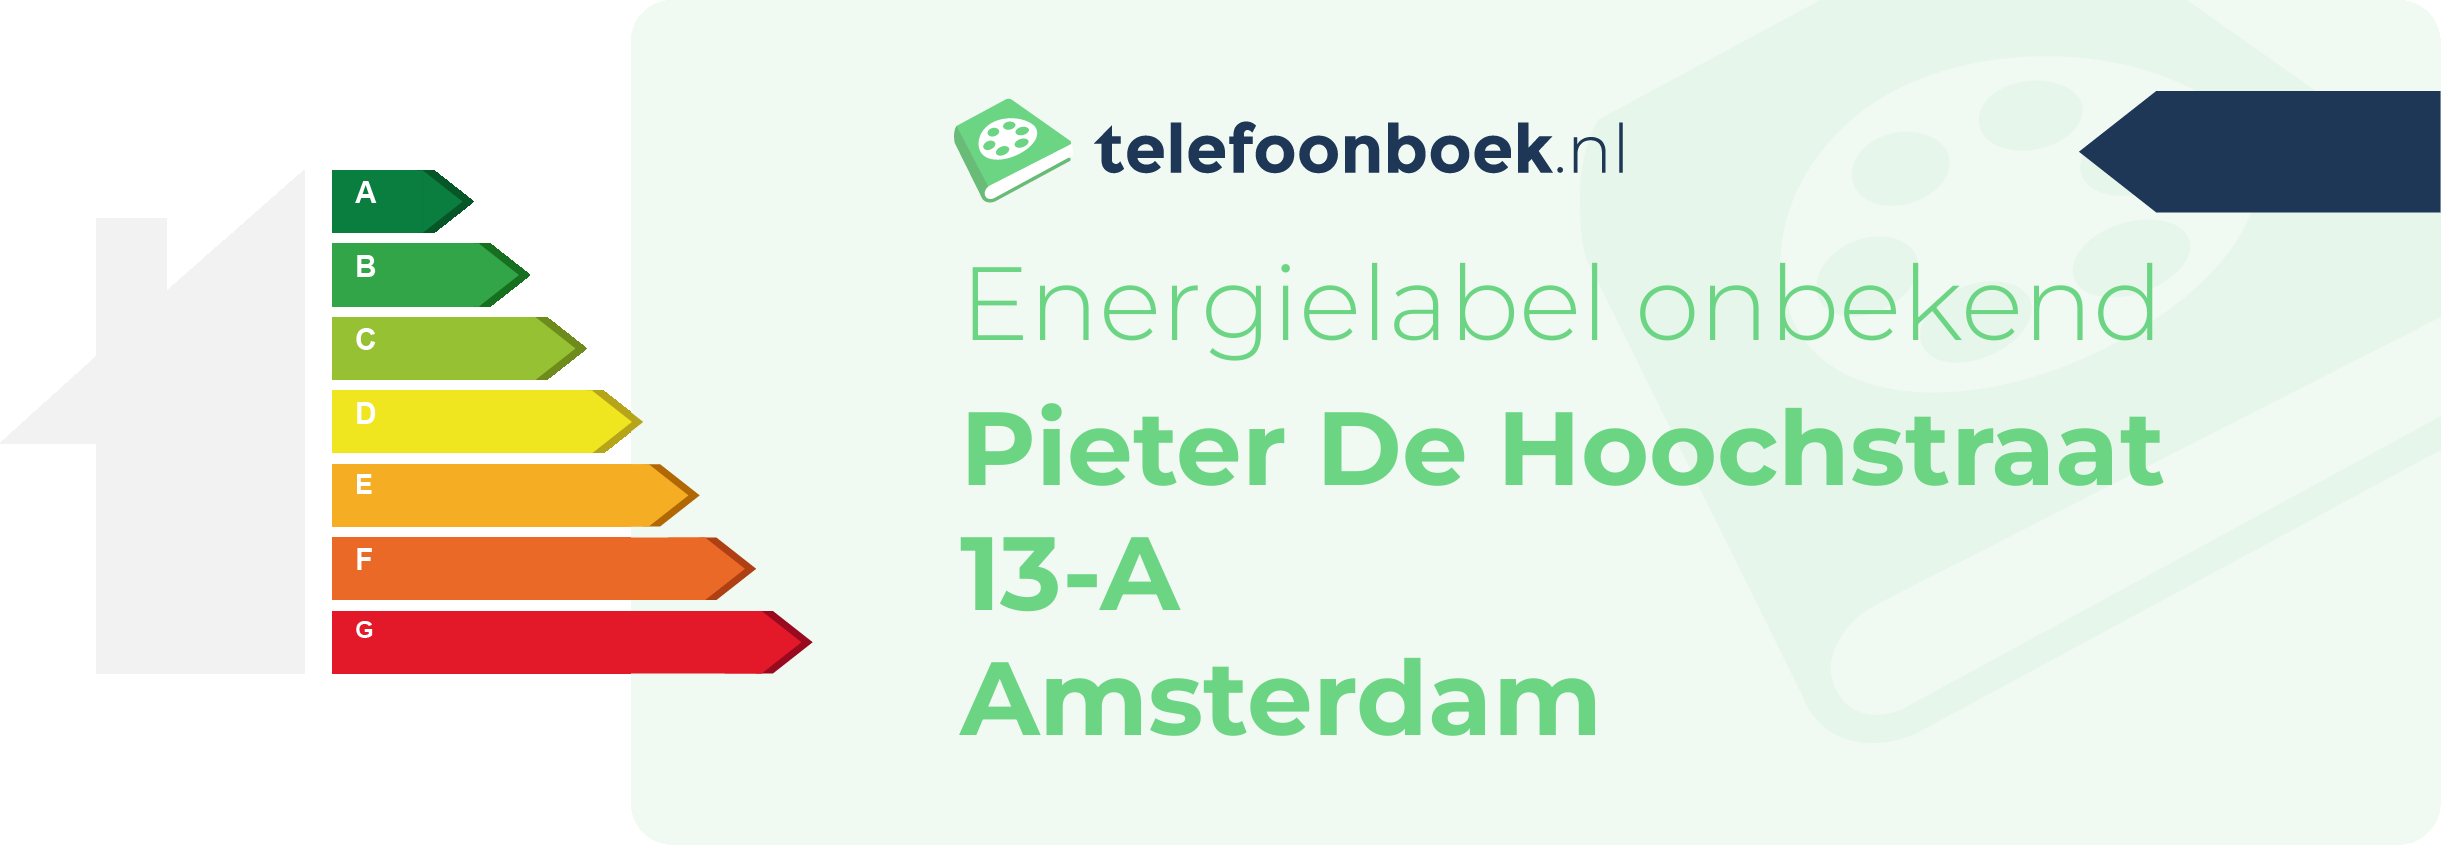 Energielabel Pieter De Hoochstraat 13-A Amsterdam